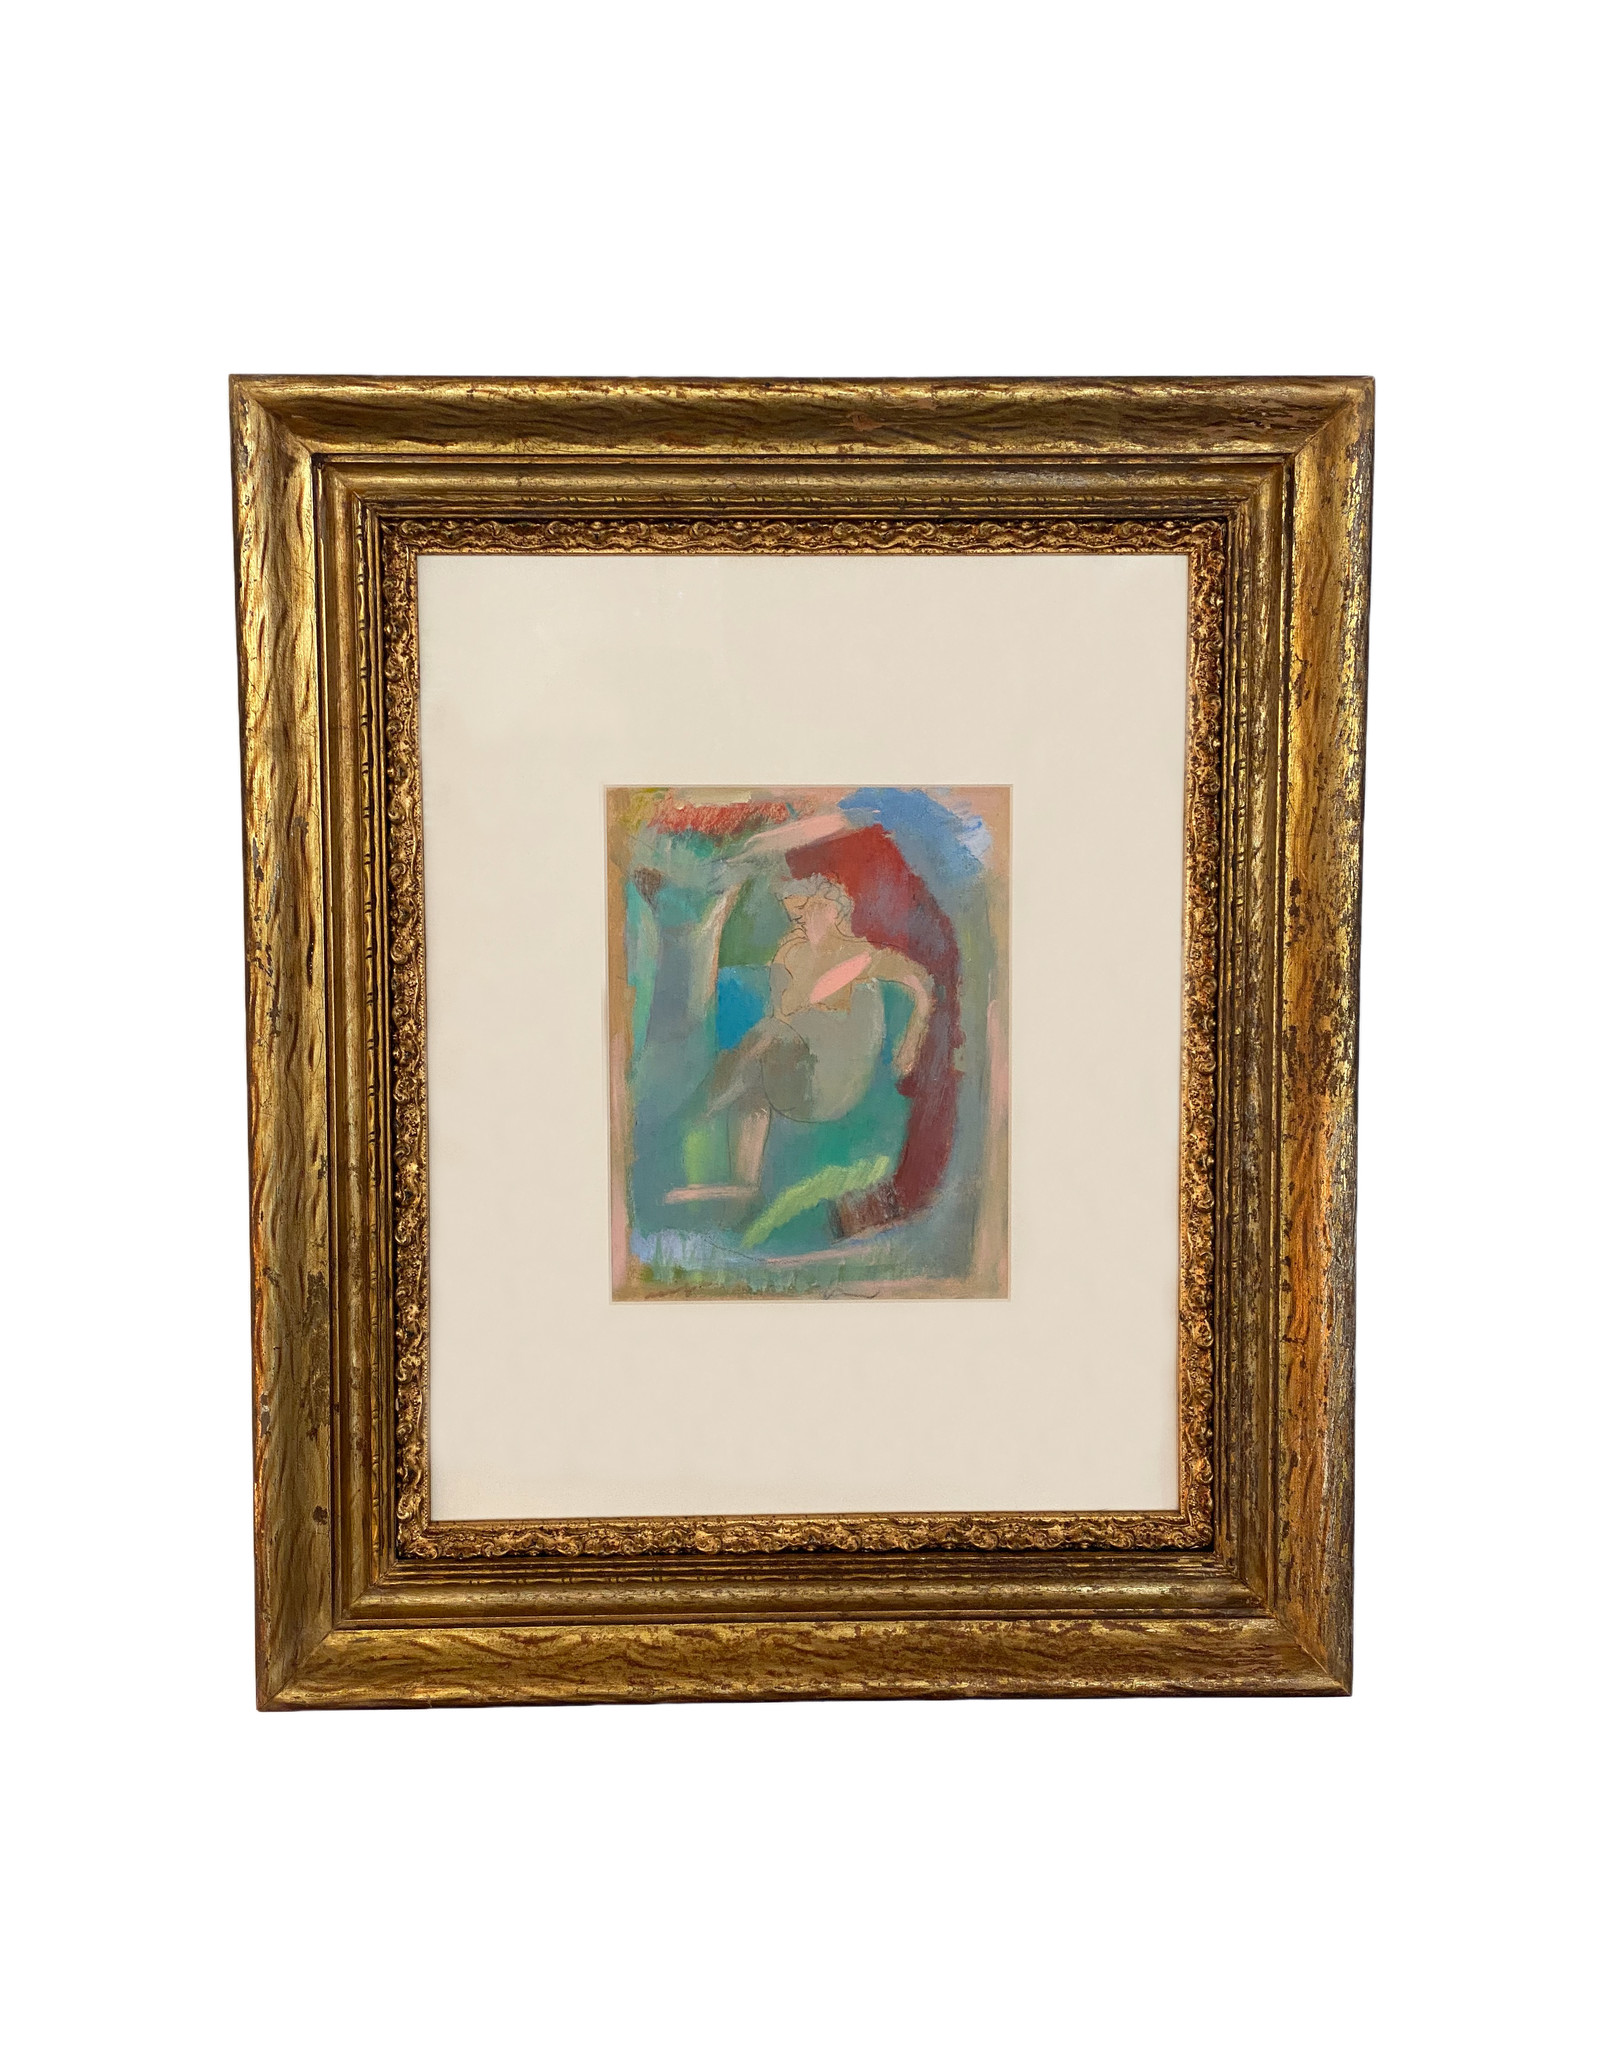 Walter Firpo, Female Nude Pencil &Oil Pastel on Paper